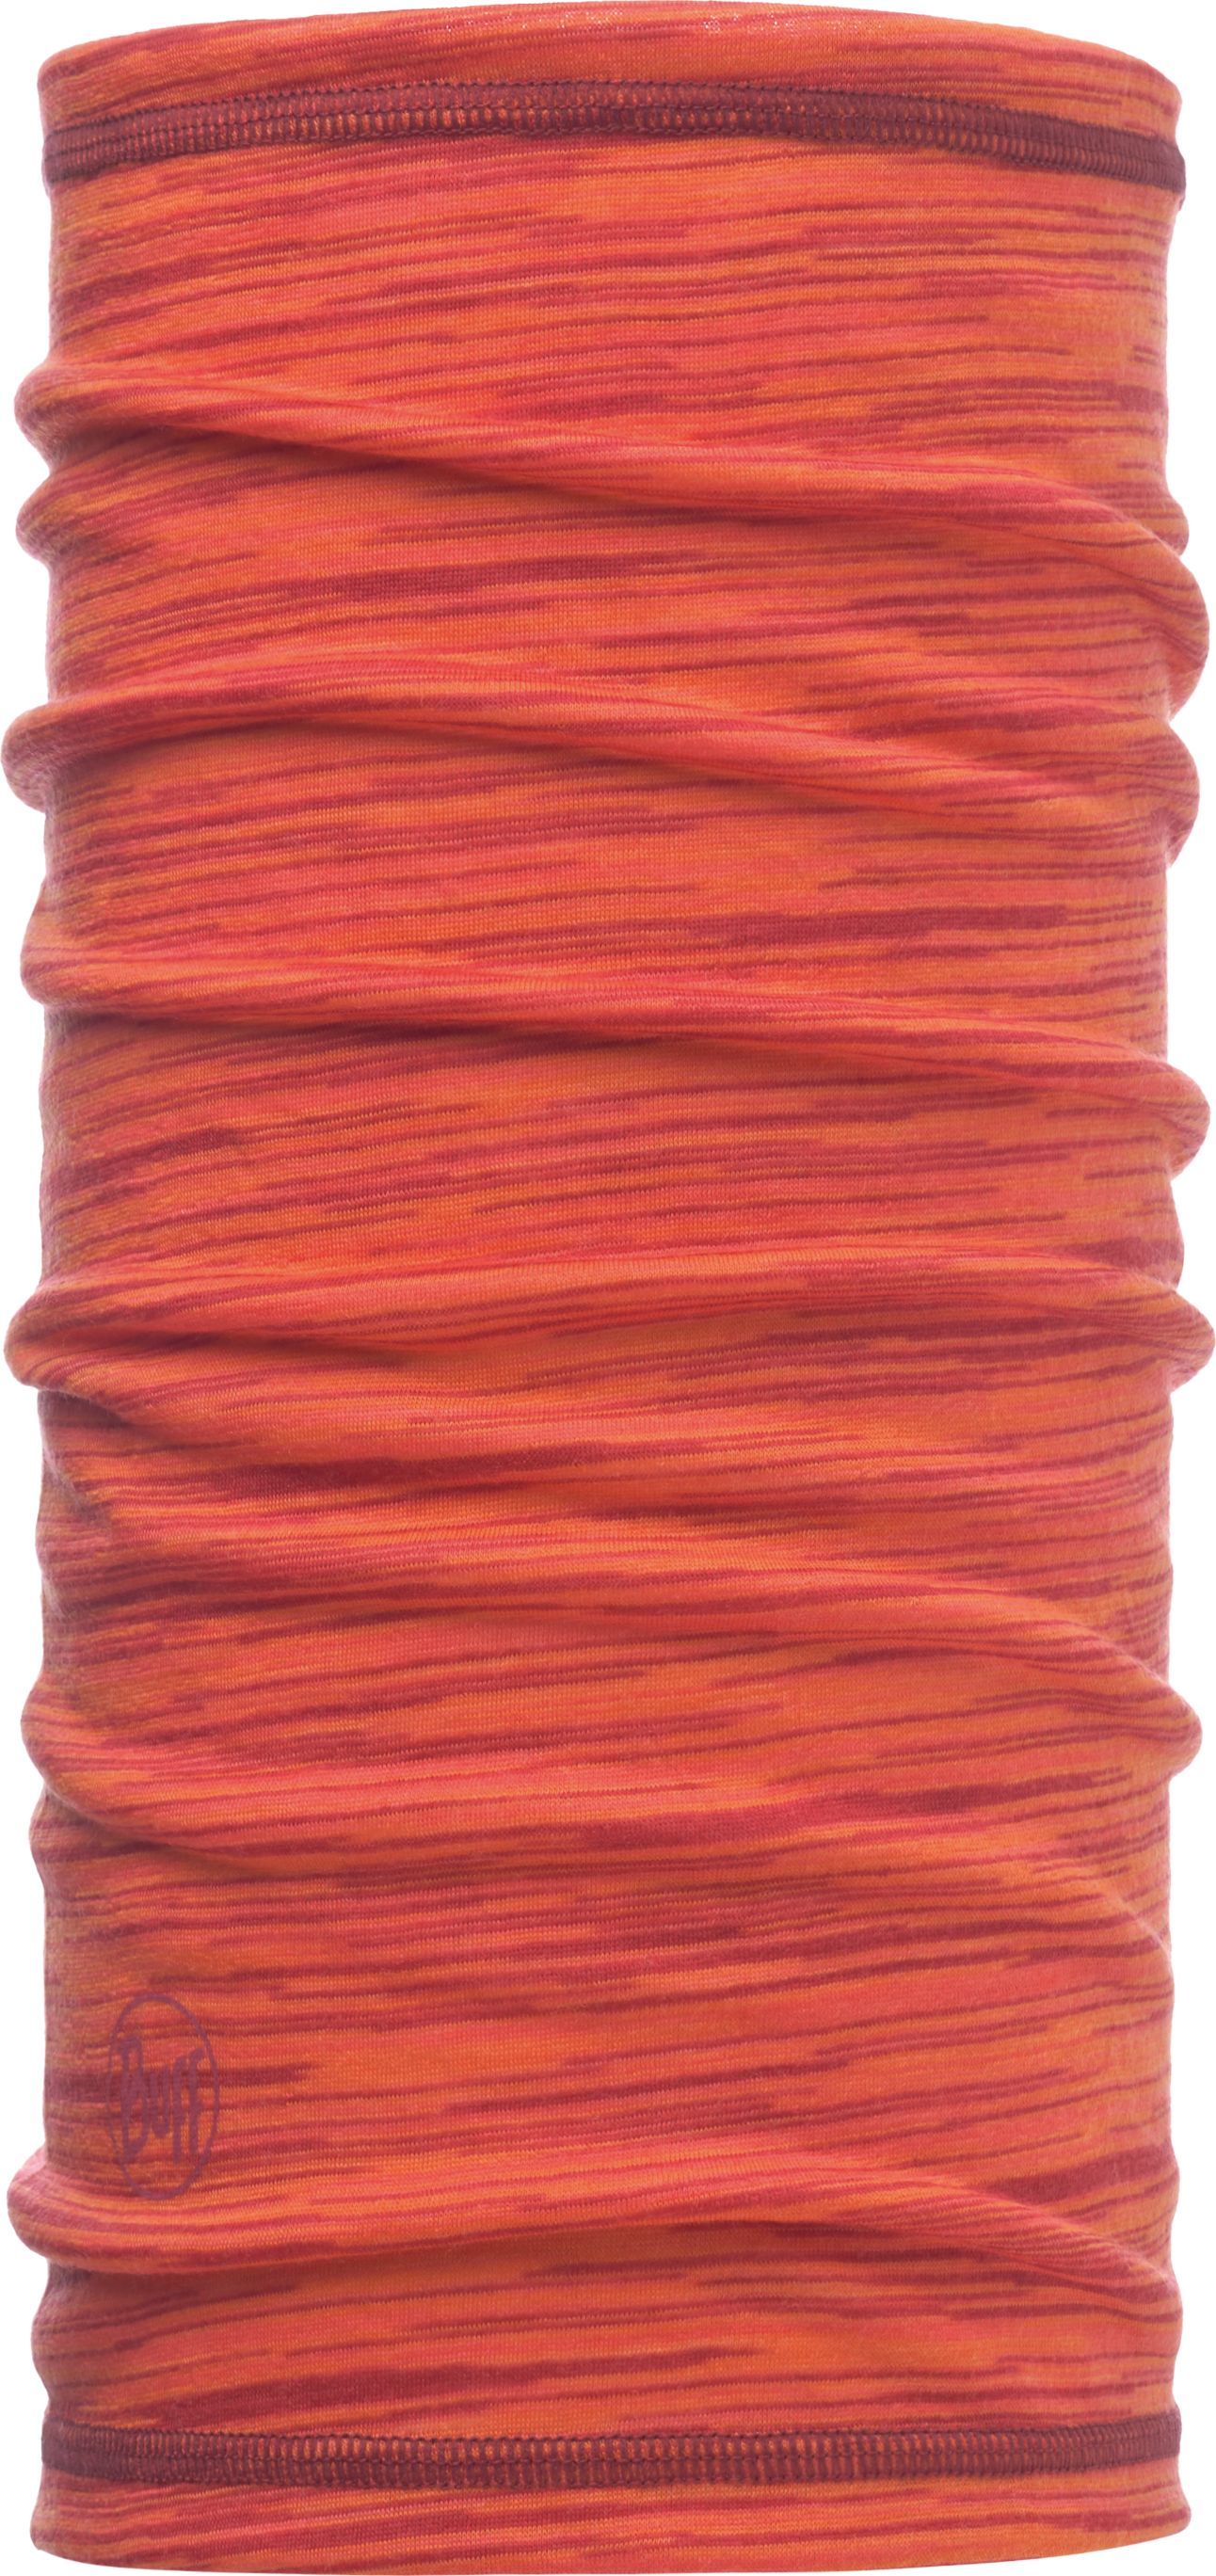 Бандана Buff 3/4 Merino Wool Coral Pink Multi, цвет: коралловый. 117006.506.10.00. Размер универсальный